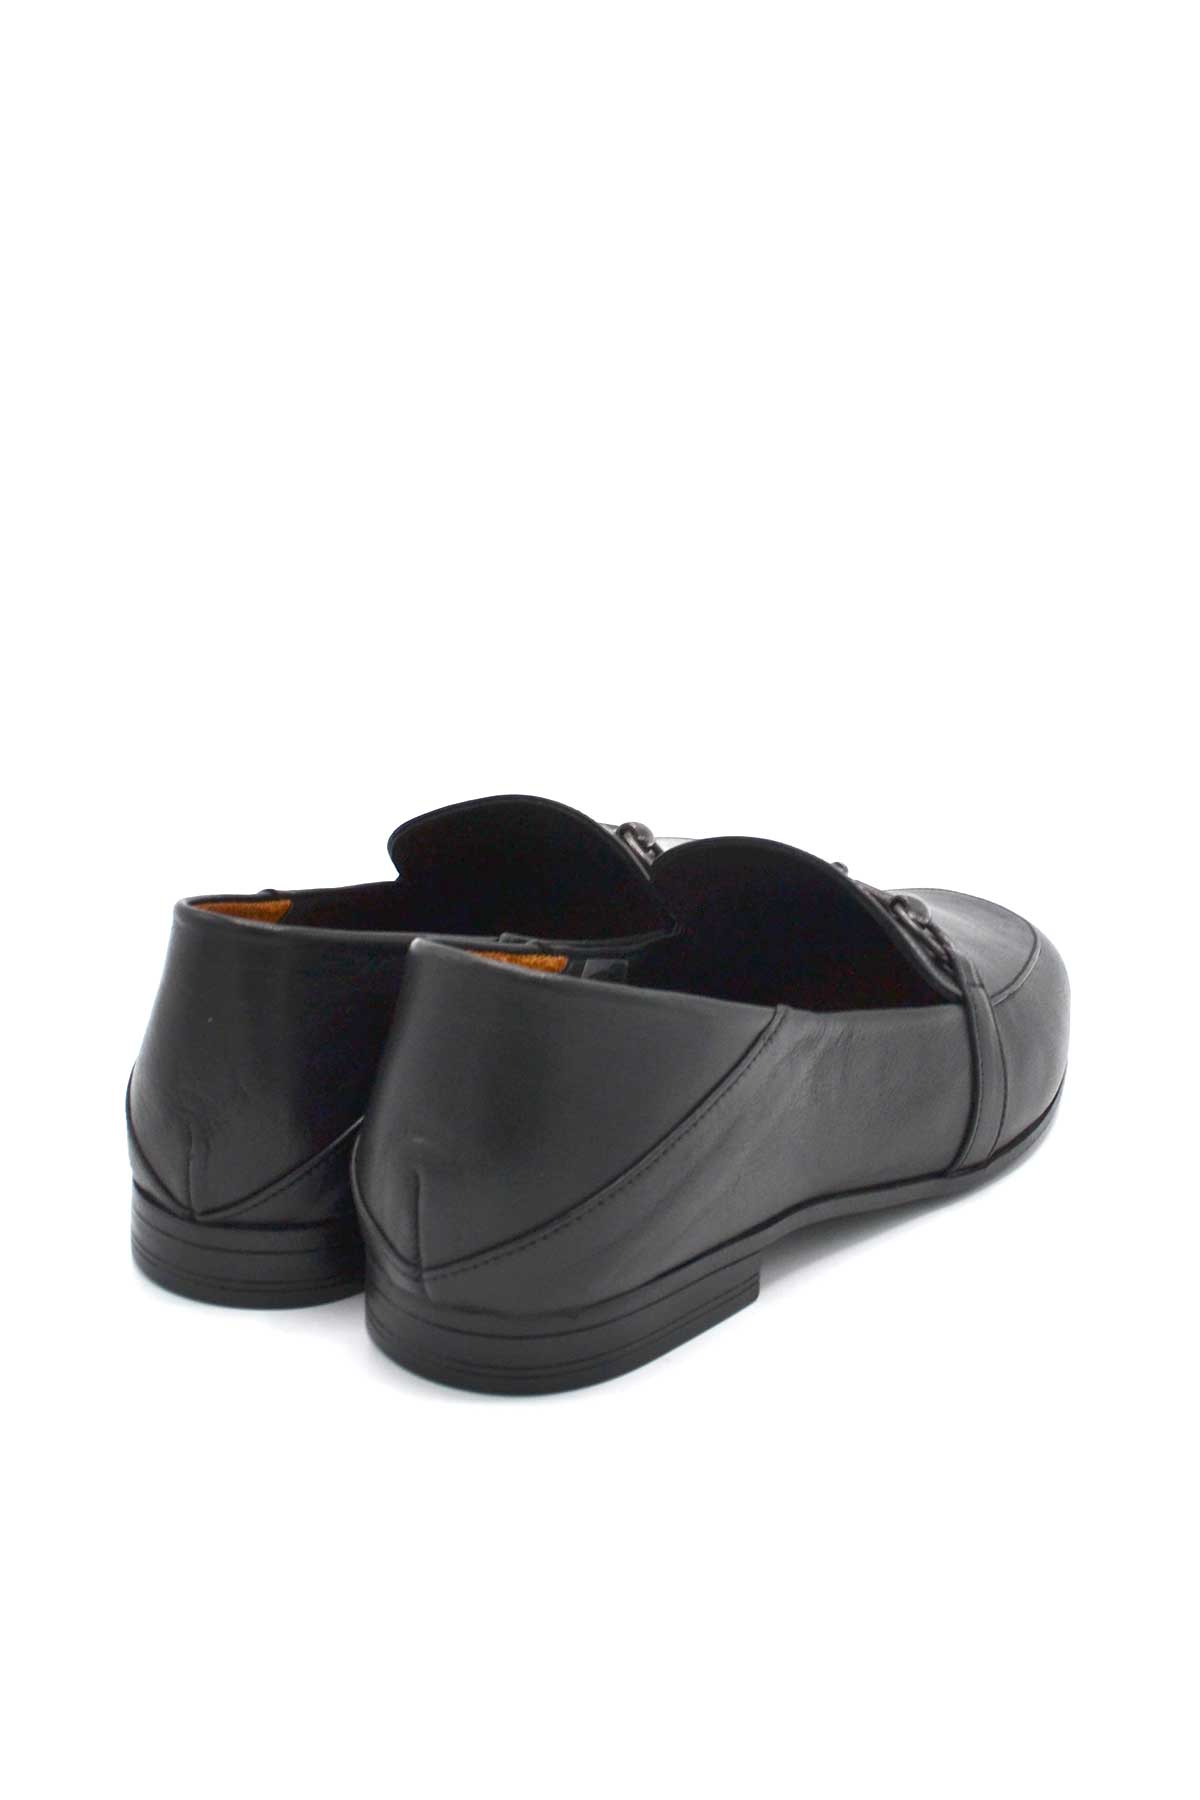 Kadın Casual Deri Babet Ayakkabı Siyah 21983501 - Thumbnail